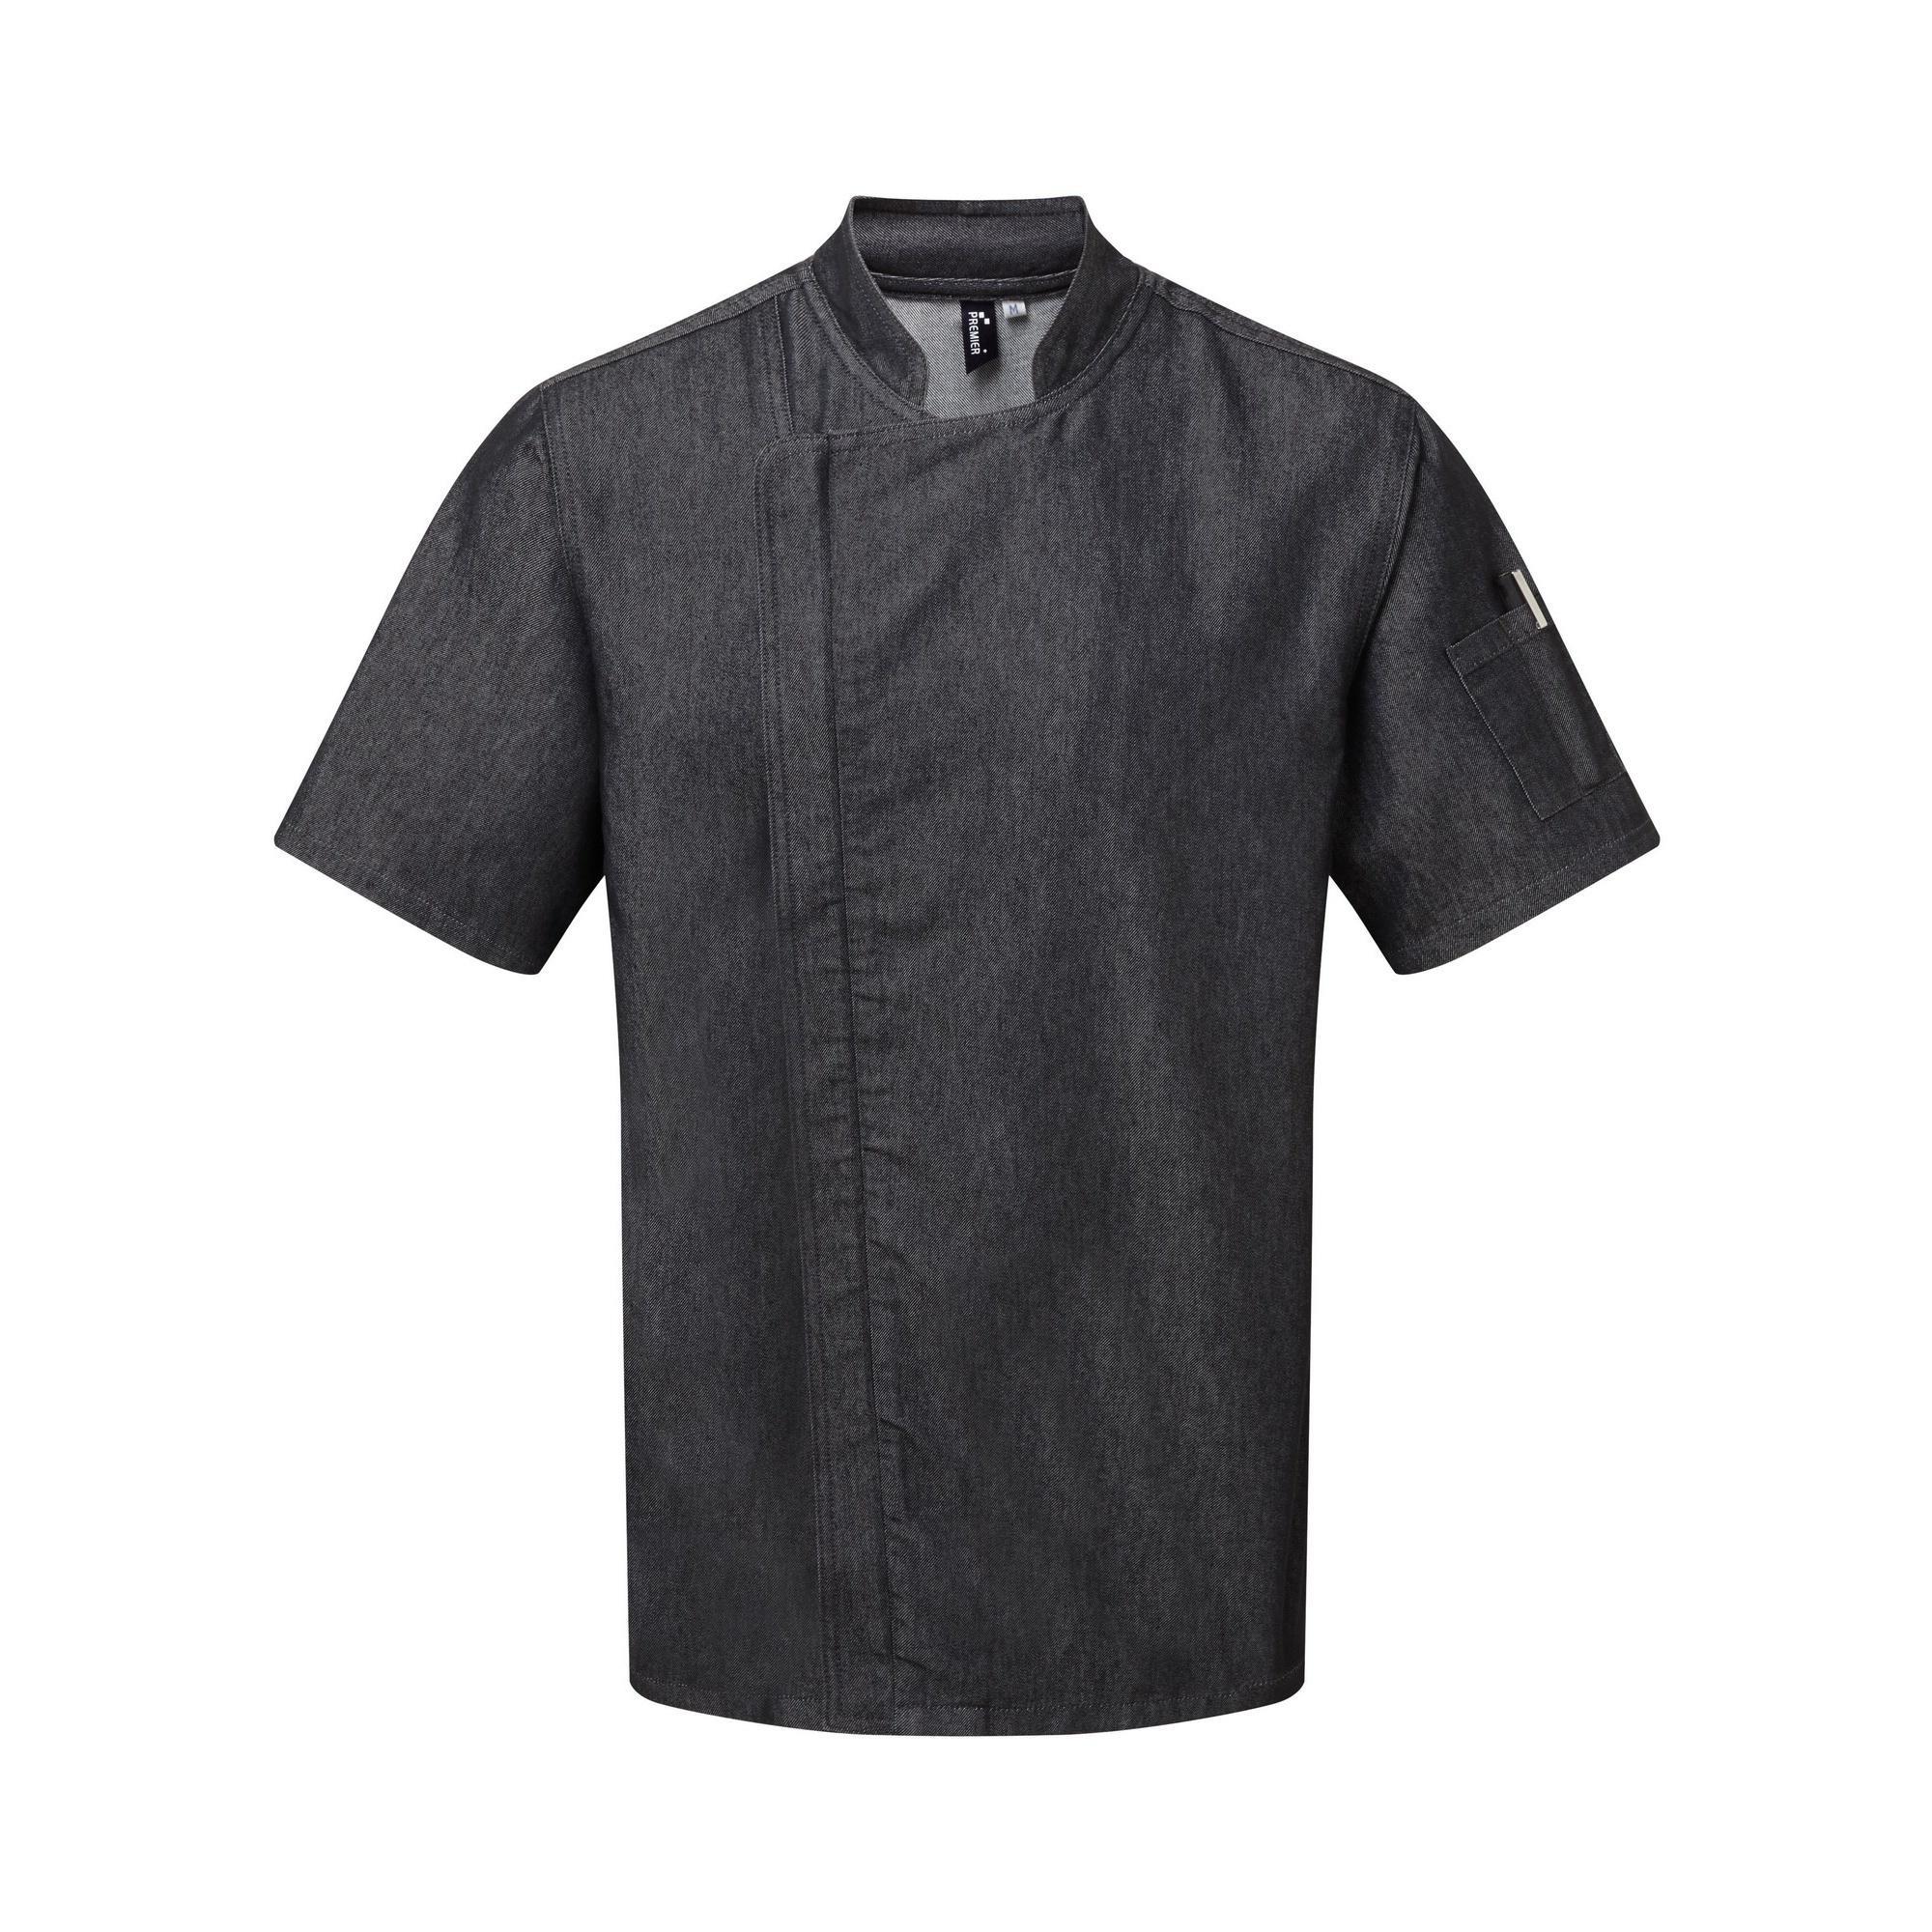 Premier Unisex Adults Chefs Zip-Close Short Sleeve Jacket (Black Denim) (S)